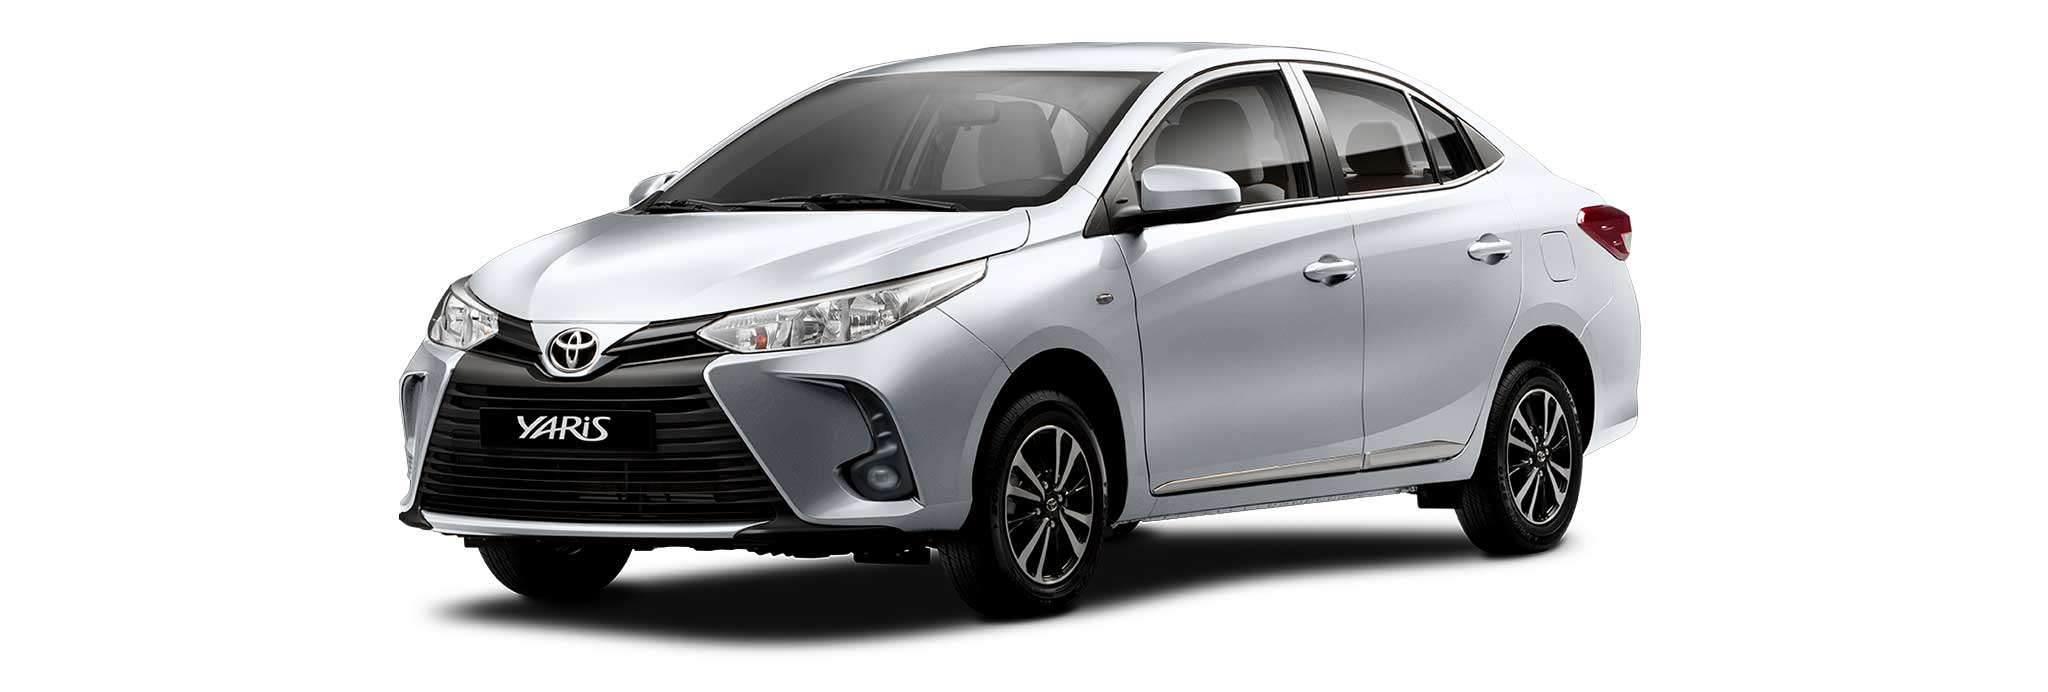 Toyota yaris 2017 price in ksa